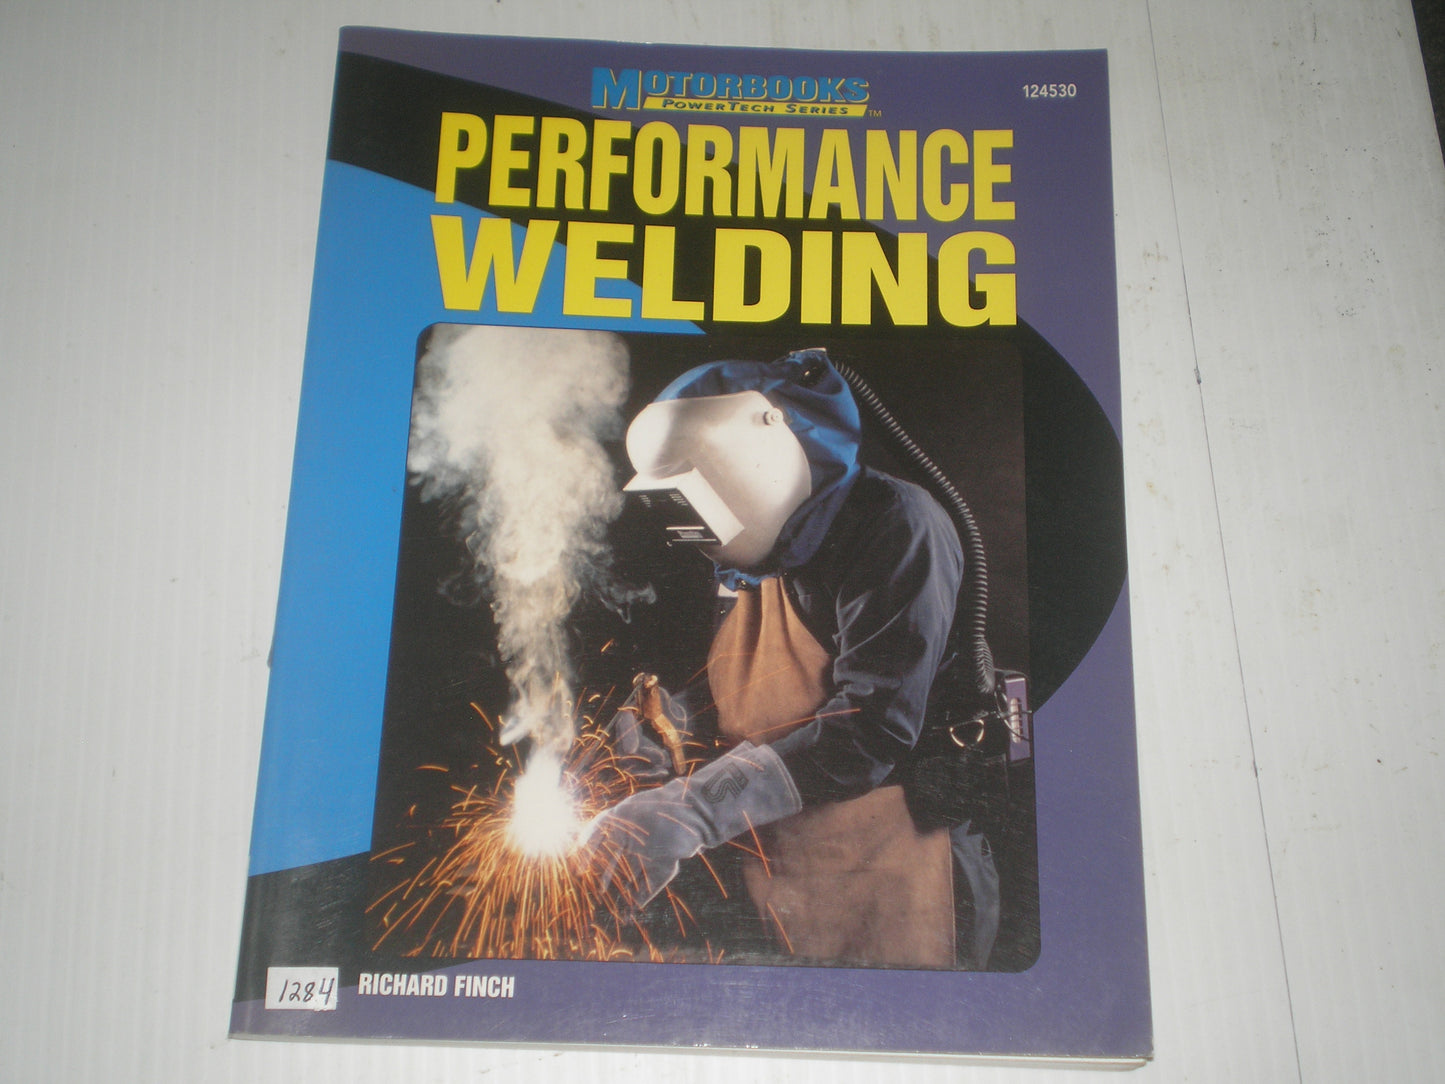 Performance Welding  By Richard Finch  Motorbooks Powertech Series 124530  #1284